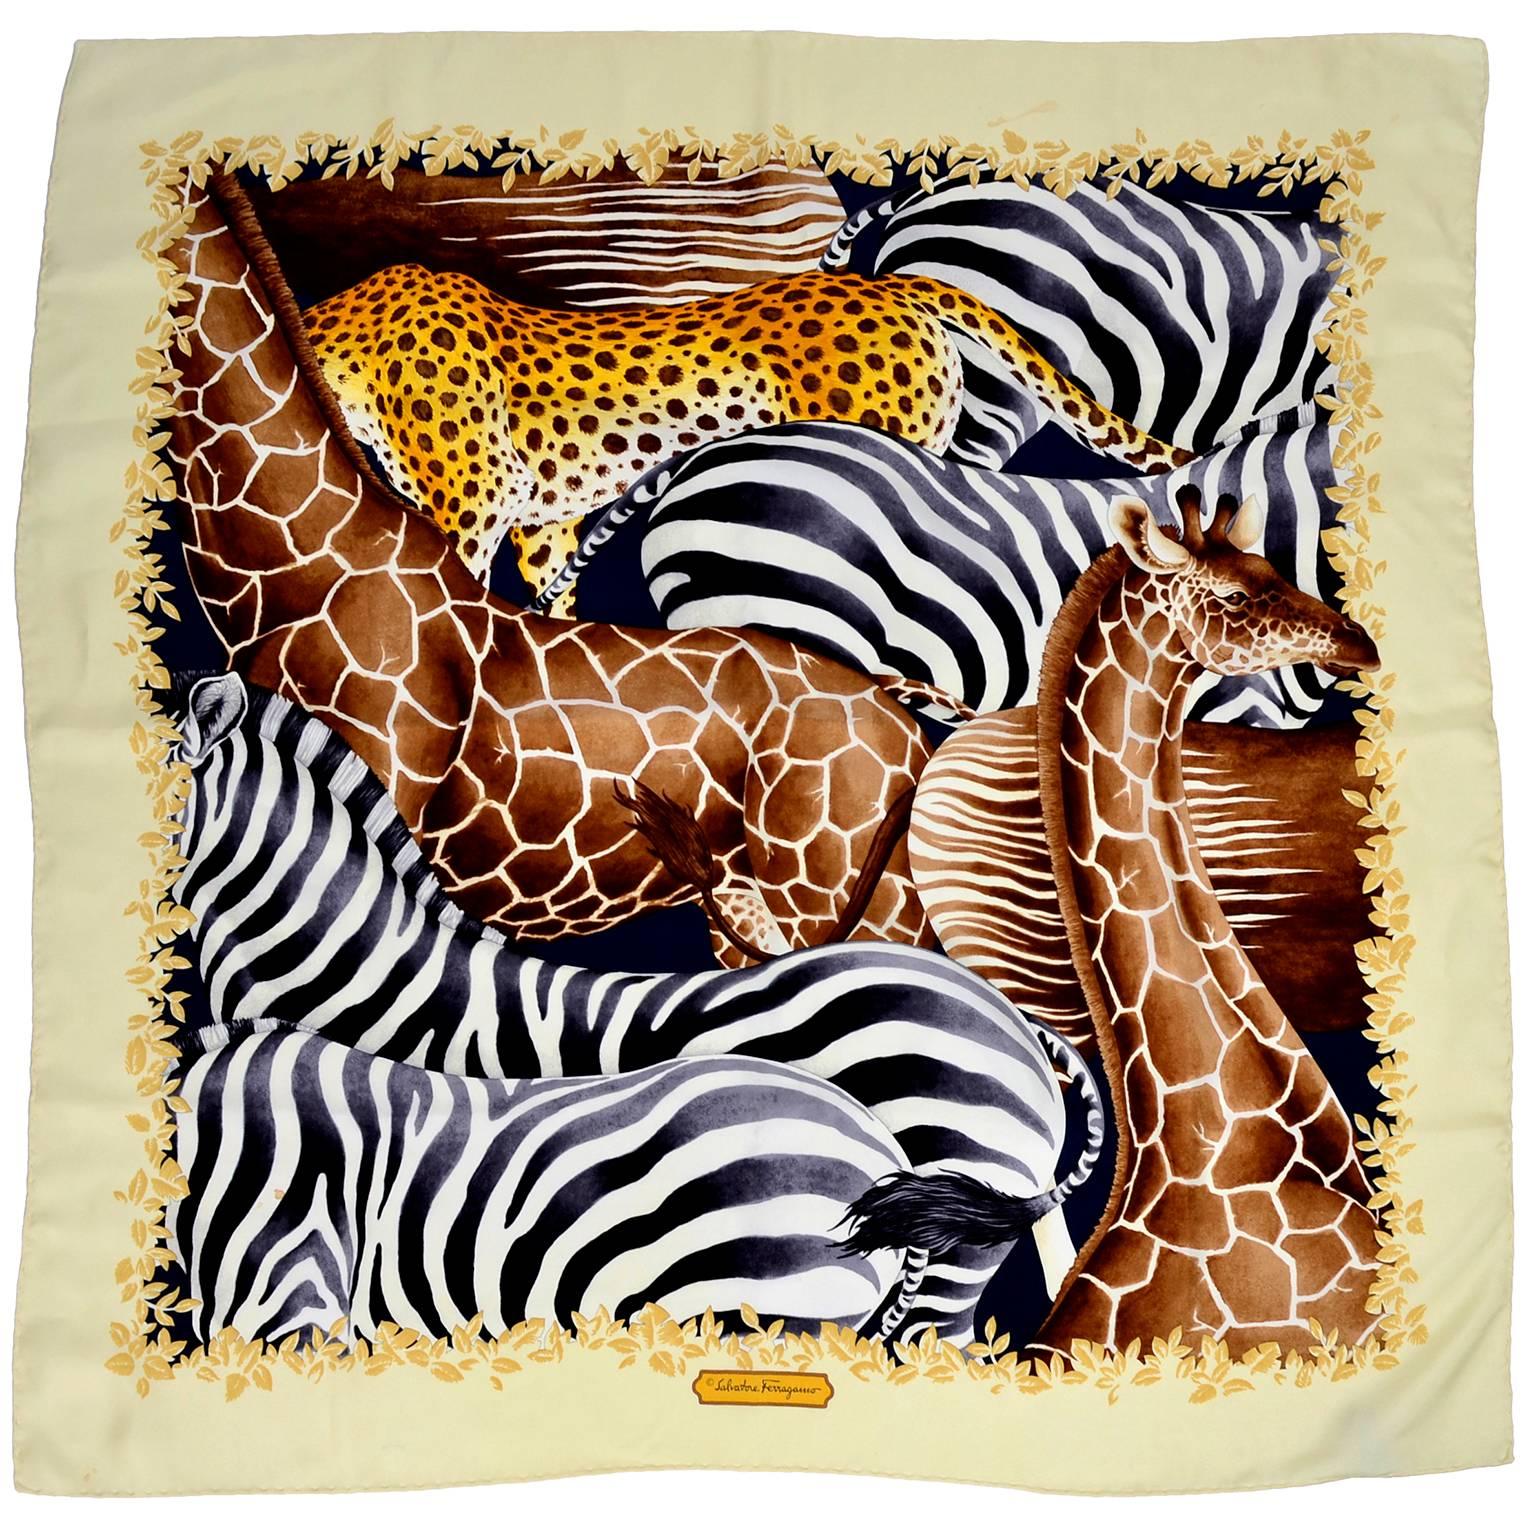 Vintage Salvatore Ferragamo Silk Scarf in Giraffe Zebra Leopard Print Pattern 